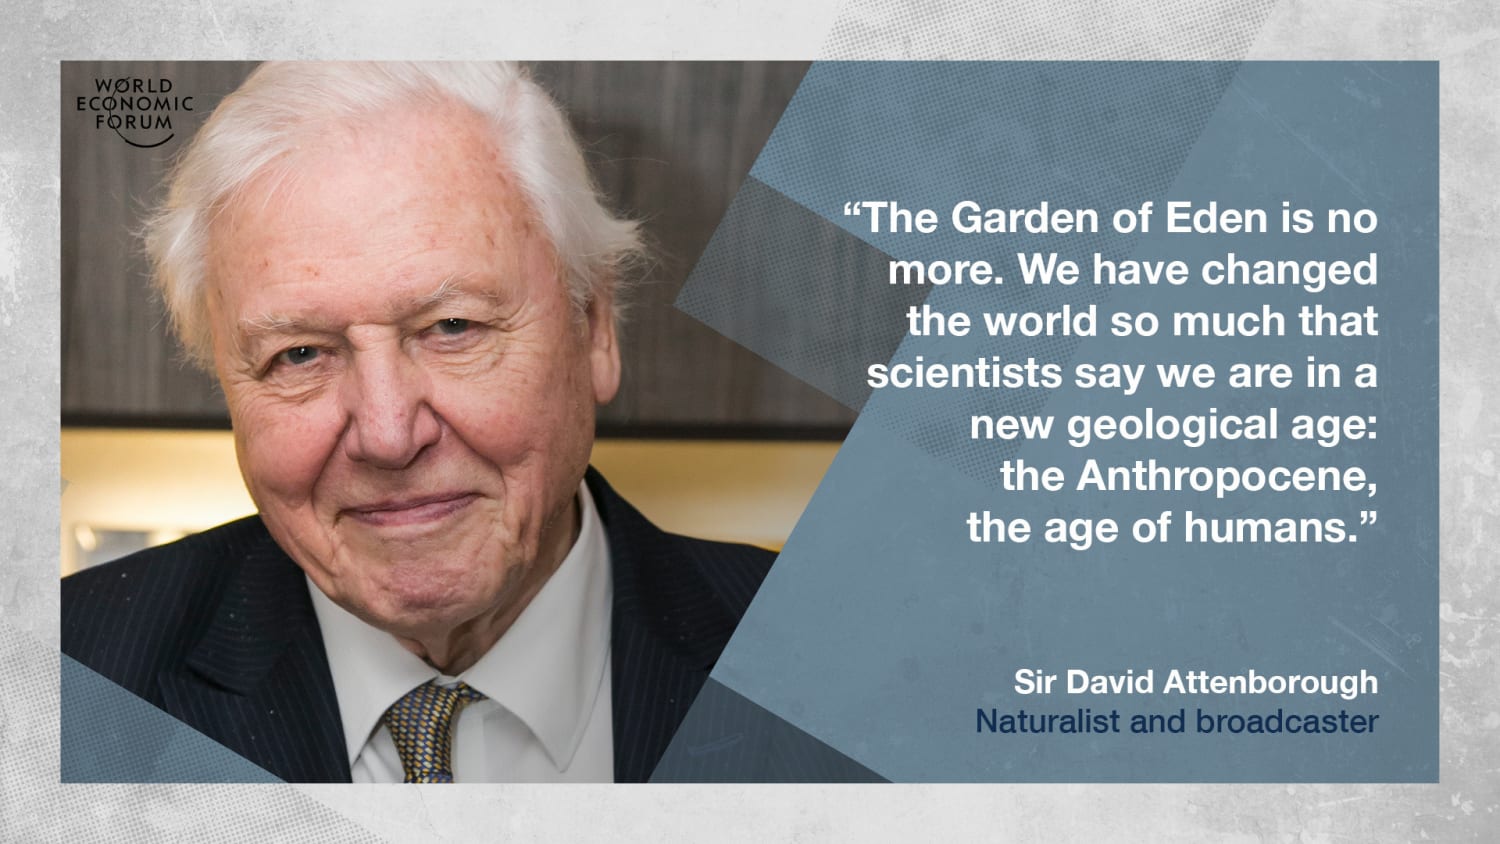 David Attenborough: 'The Garden of Eden is no more'. Read his Davos speech in full